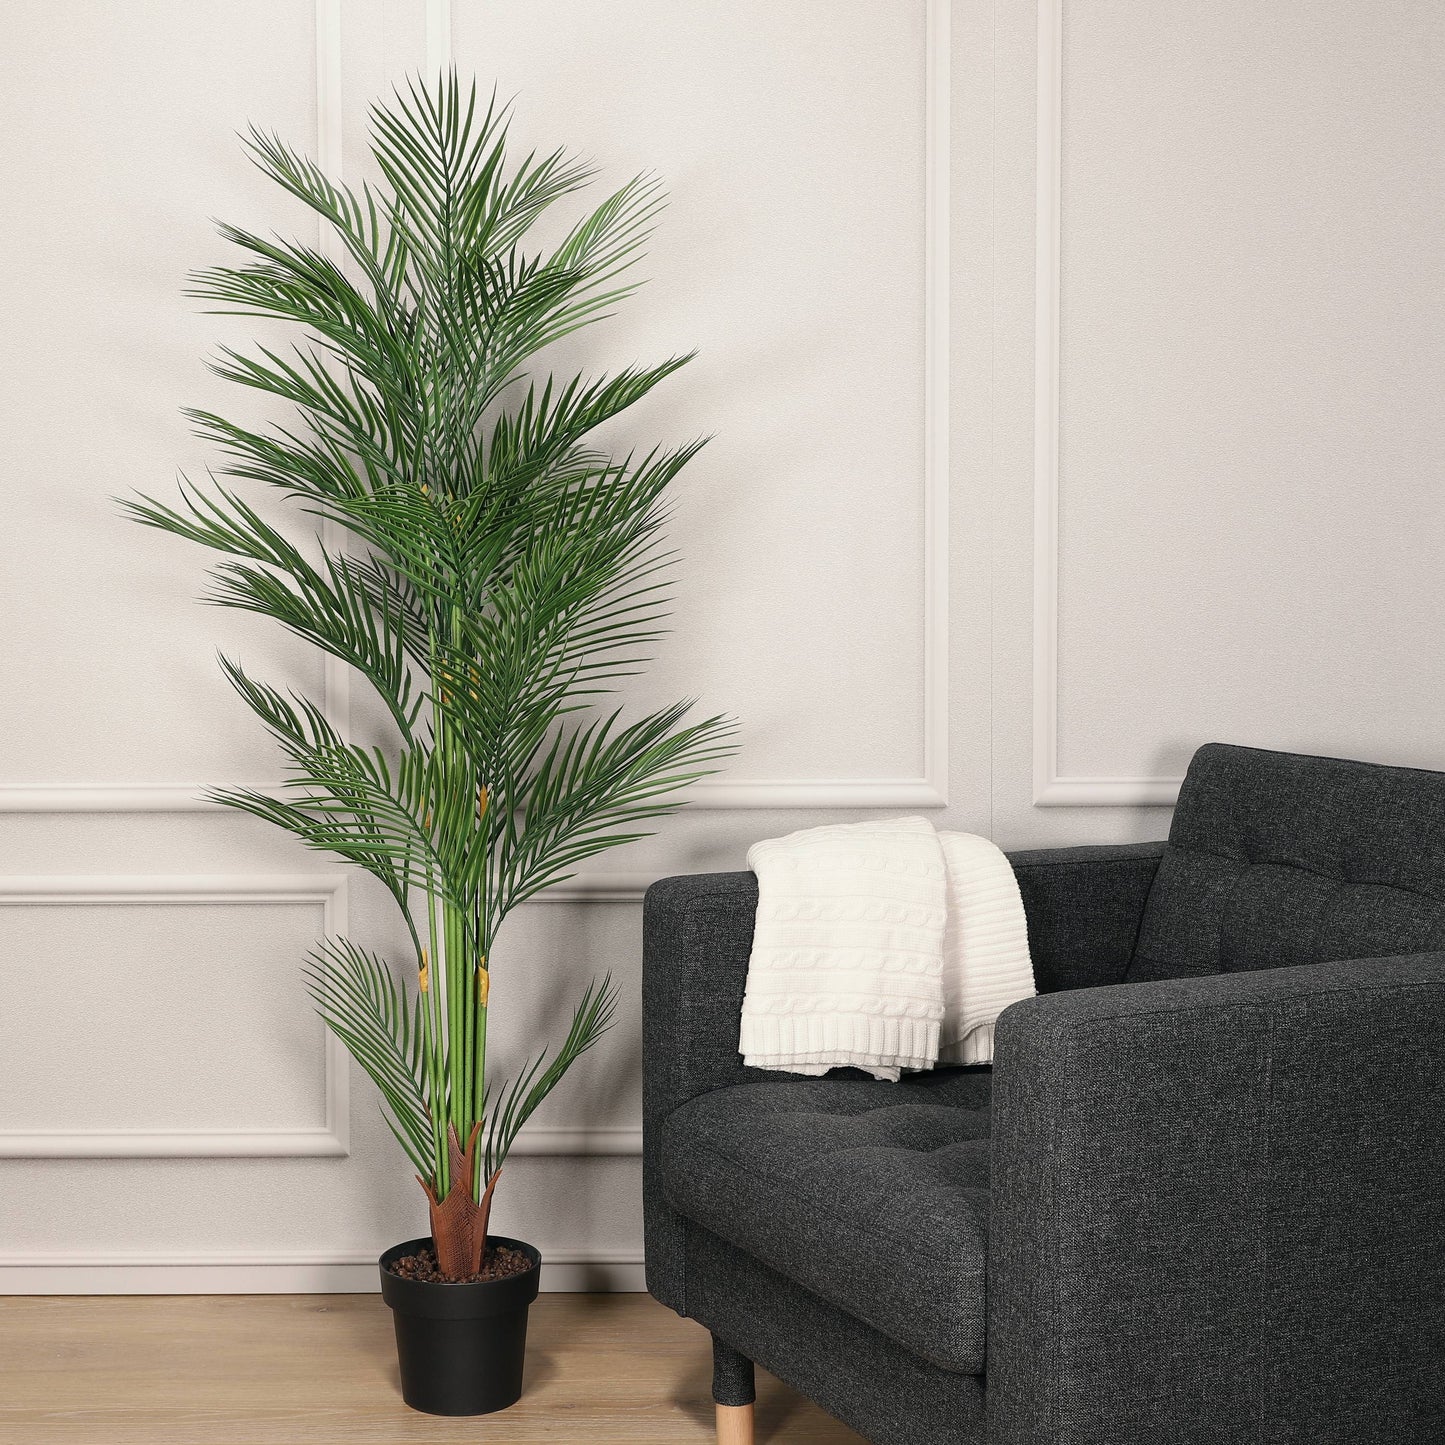 63" Artificial Areca Palm Tree with Black Plastic Vase